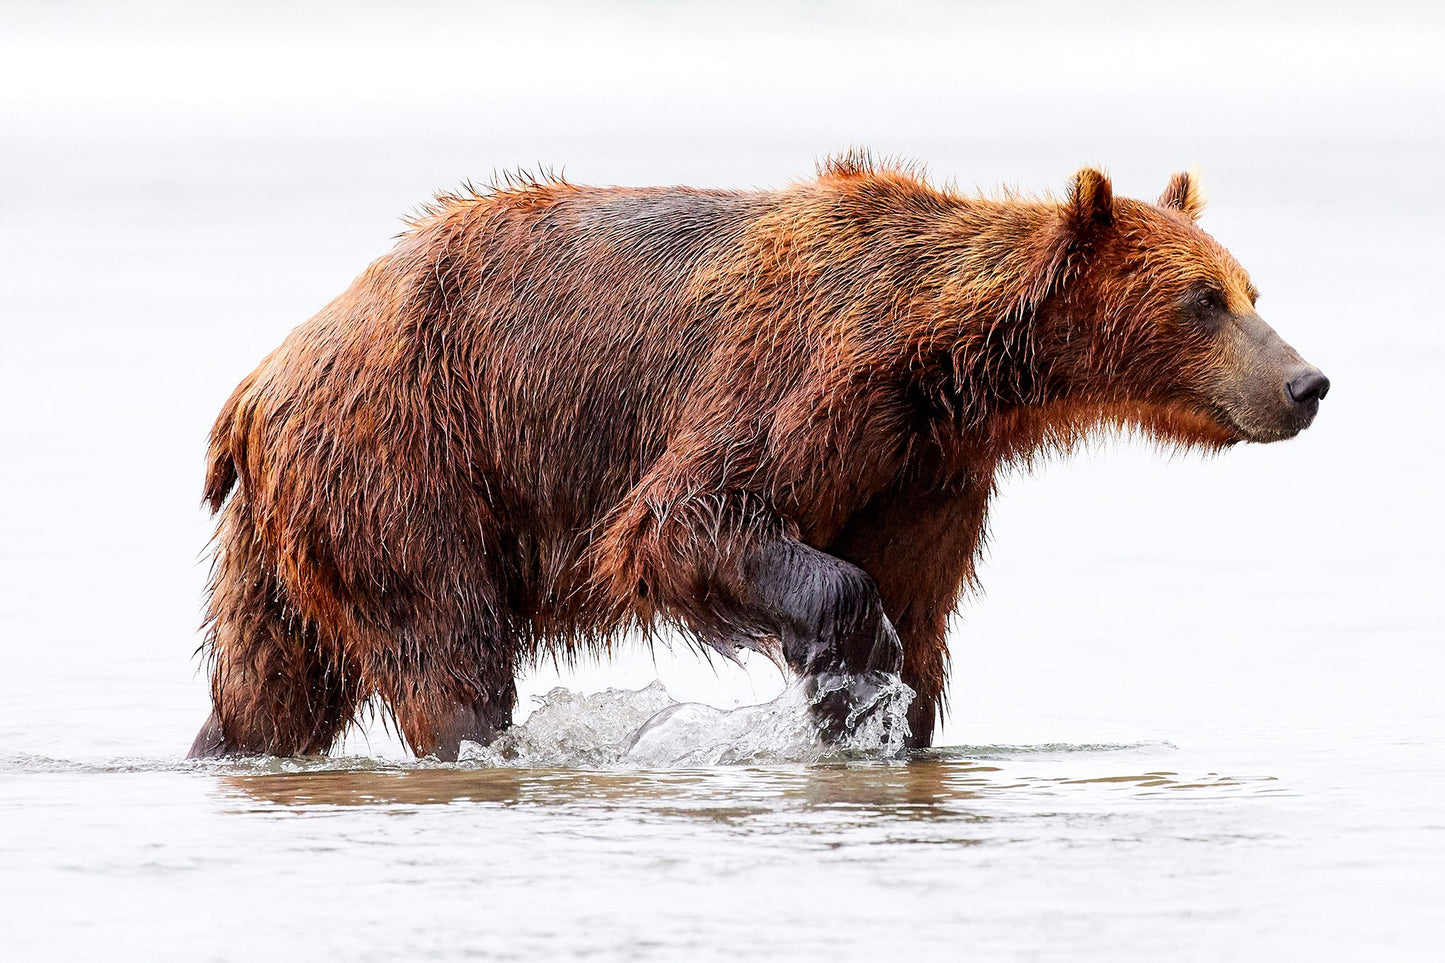 The hunter - Brown bear, Kamchatka Russia